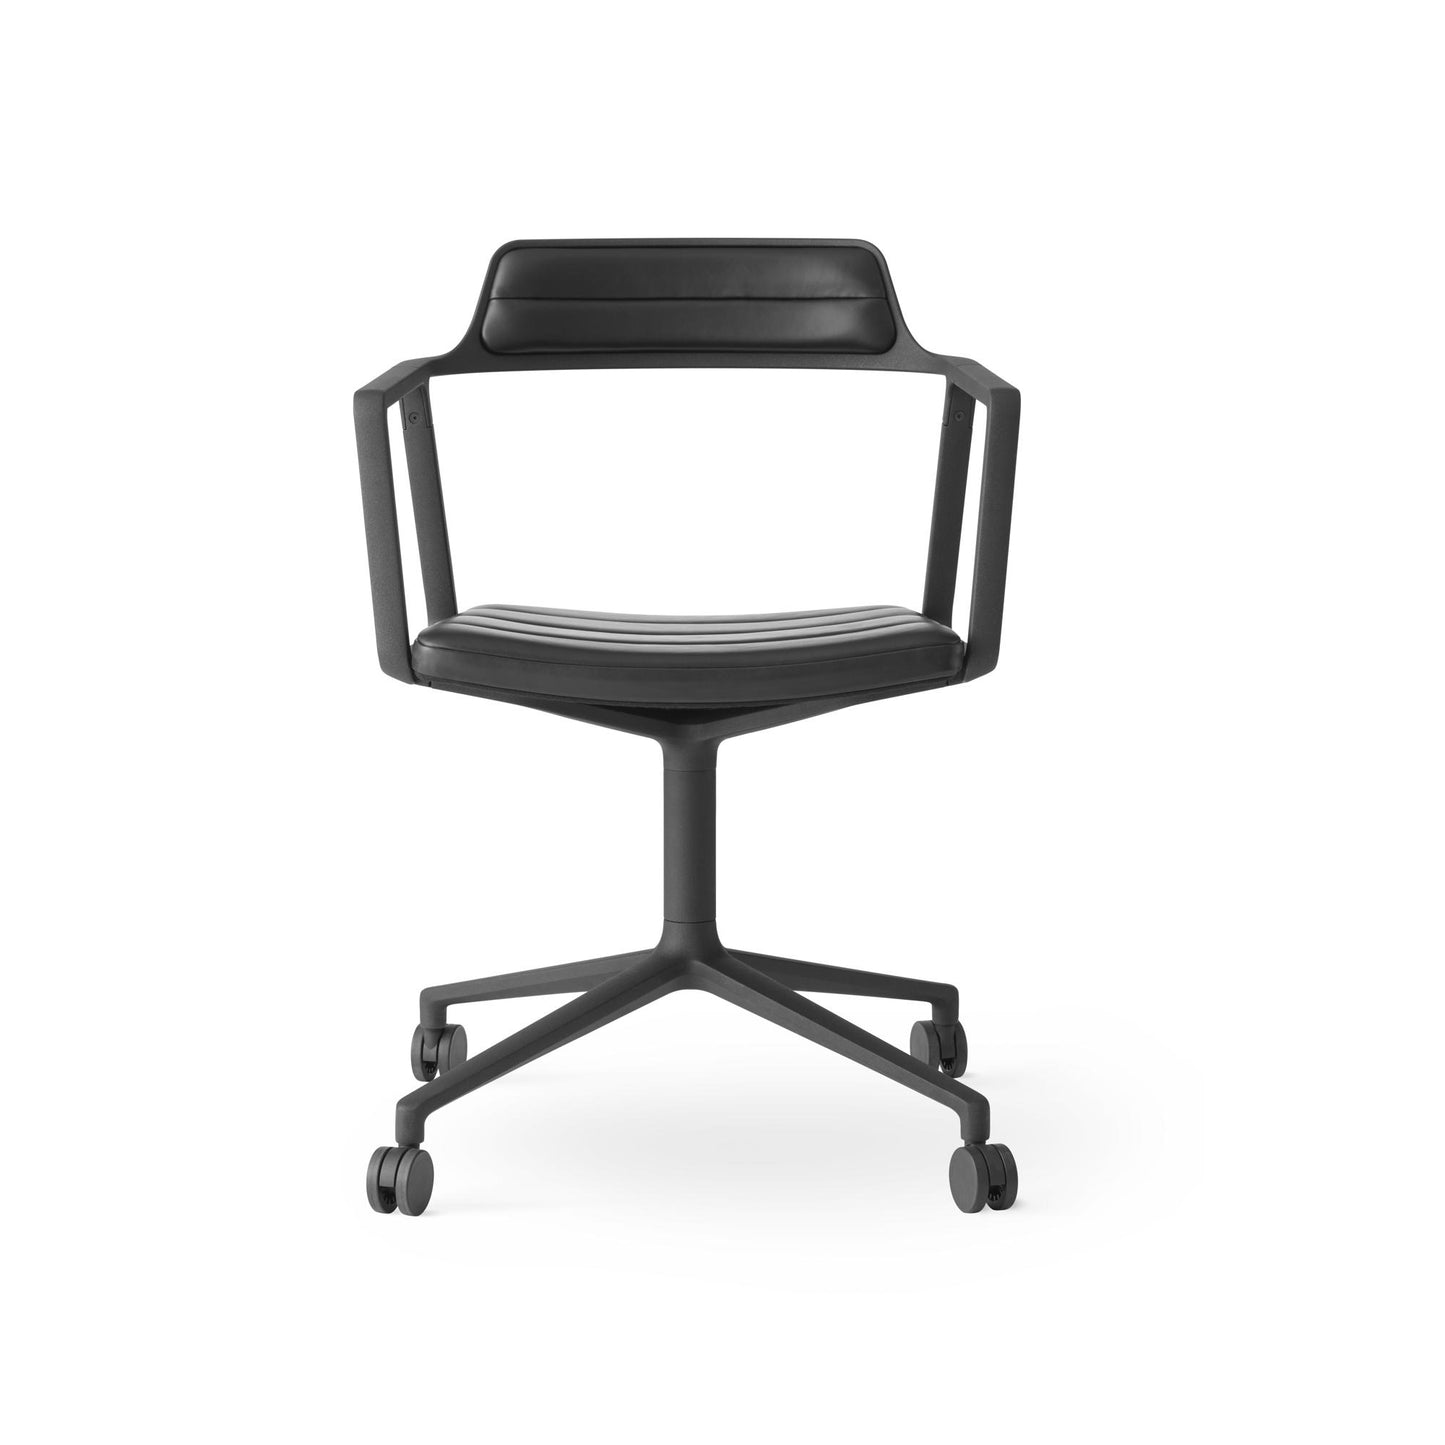 452 Swivel Chair by VIPP #Black / Black / With wheels